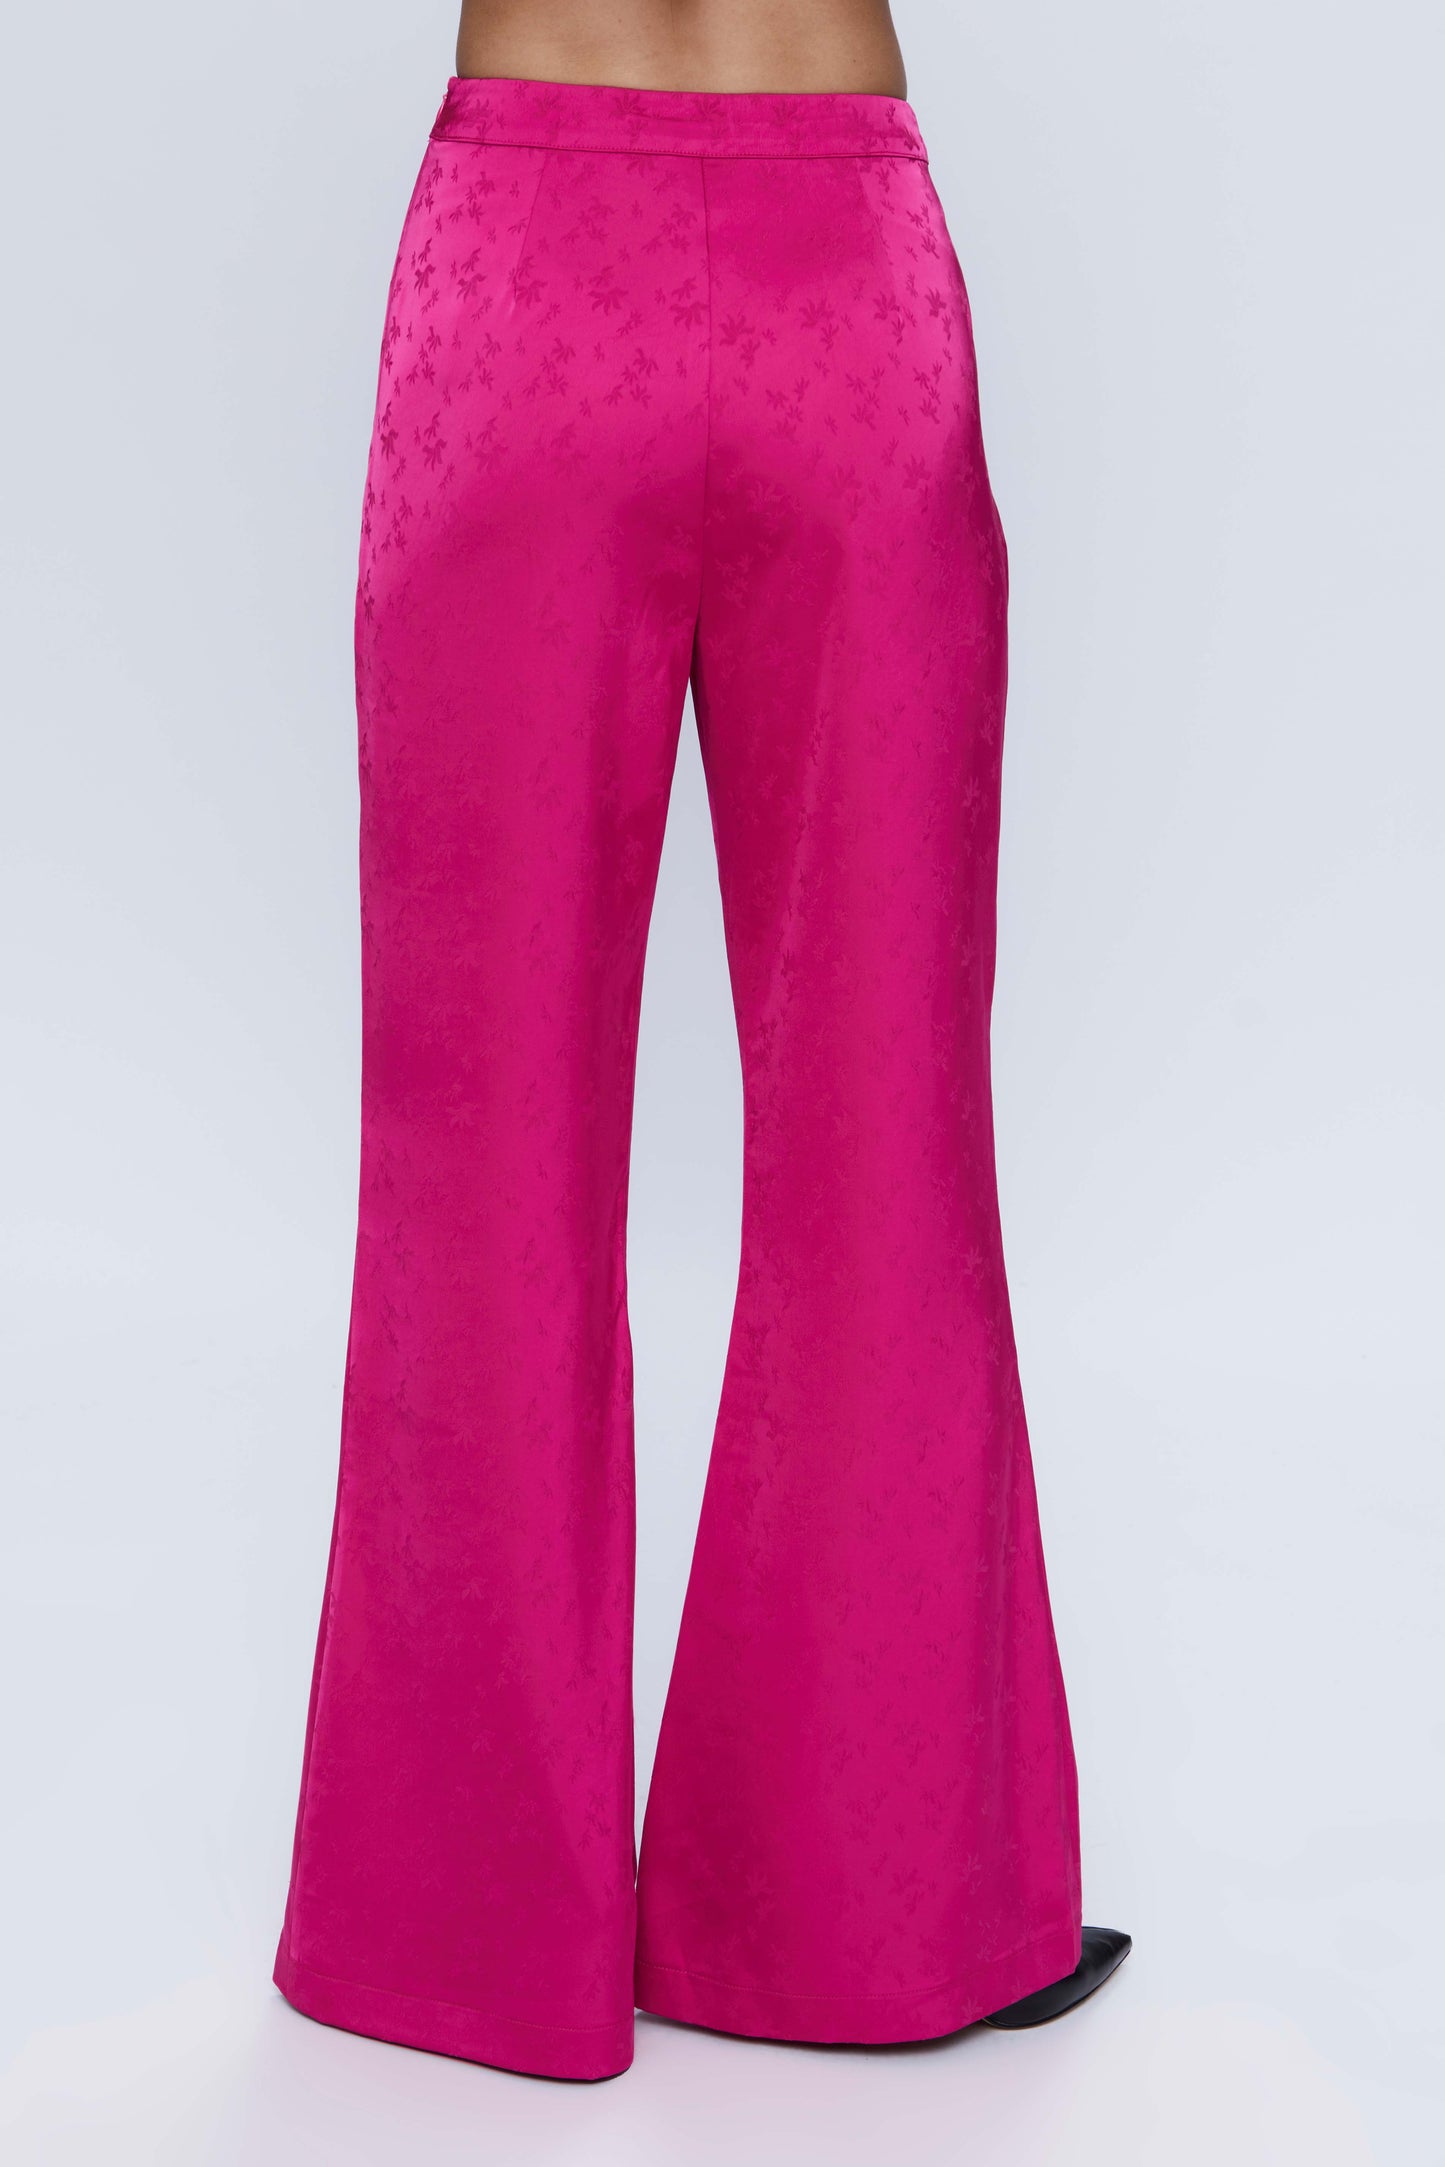 Flowing suit pants in pink jacquard